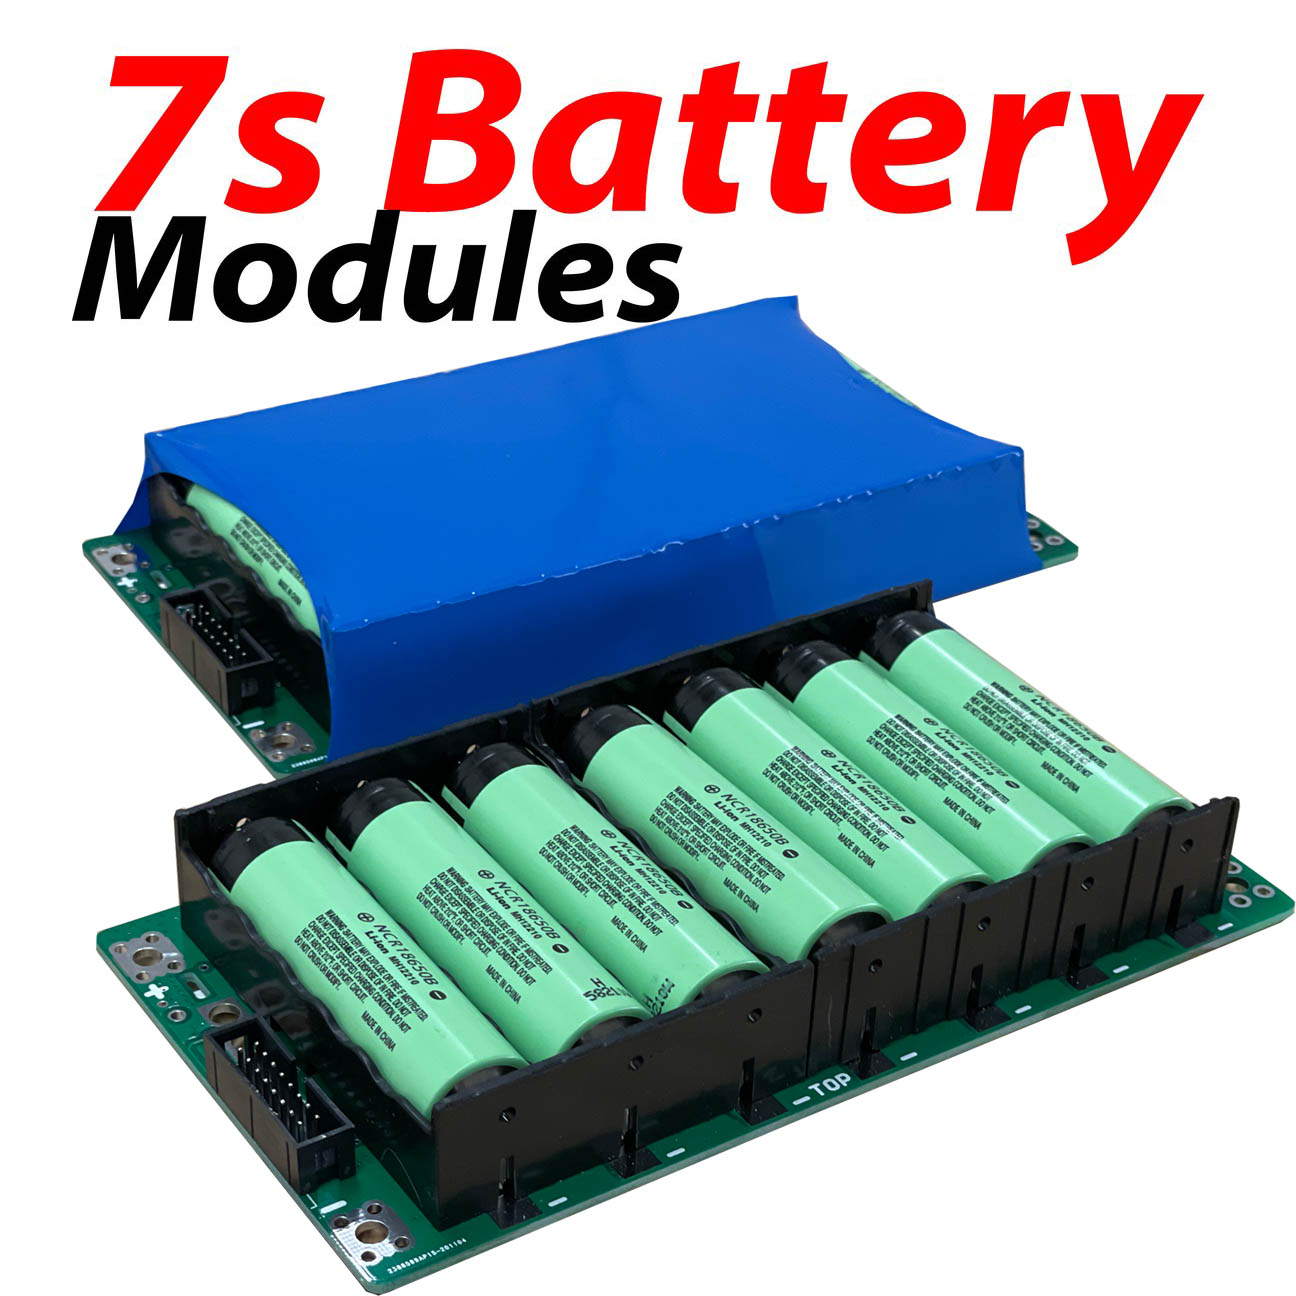 7S 24v Battery Modules - New NCR18650B cells